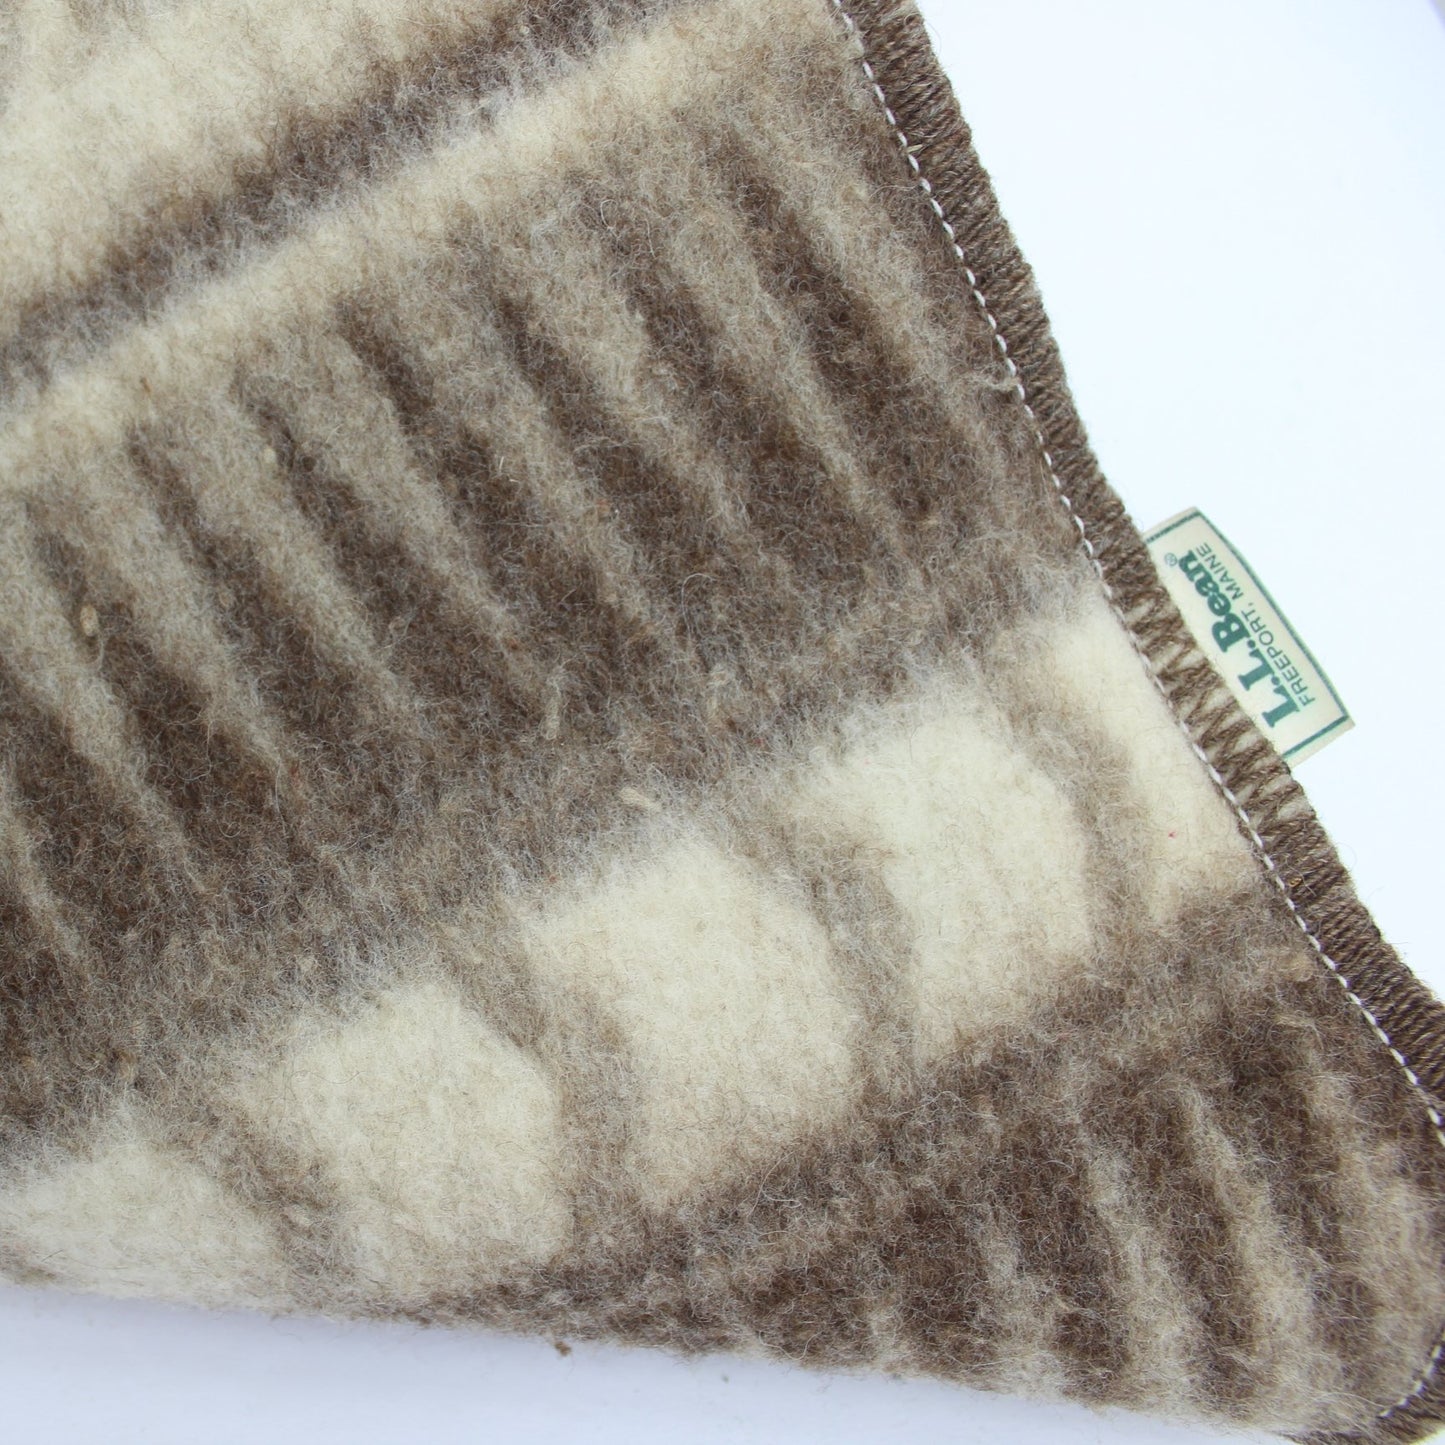 L L Bean Wool Cotton Blanket Ecuador Heavy Thick Lush Vintage closeup fiber